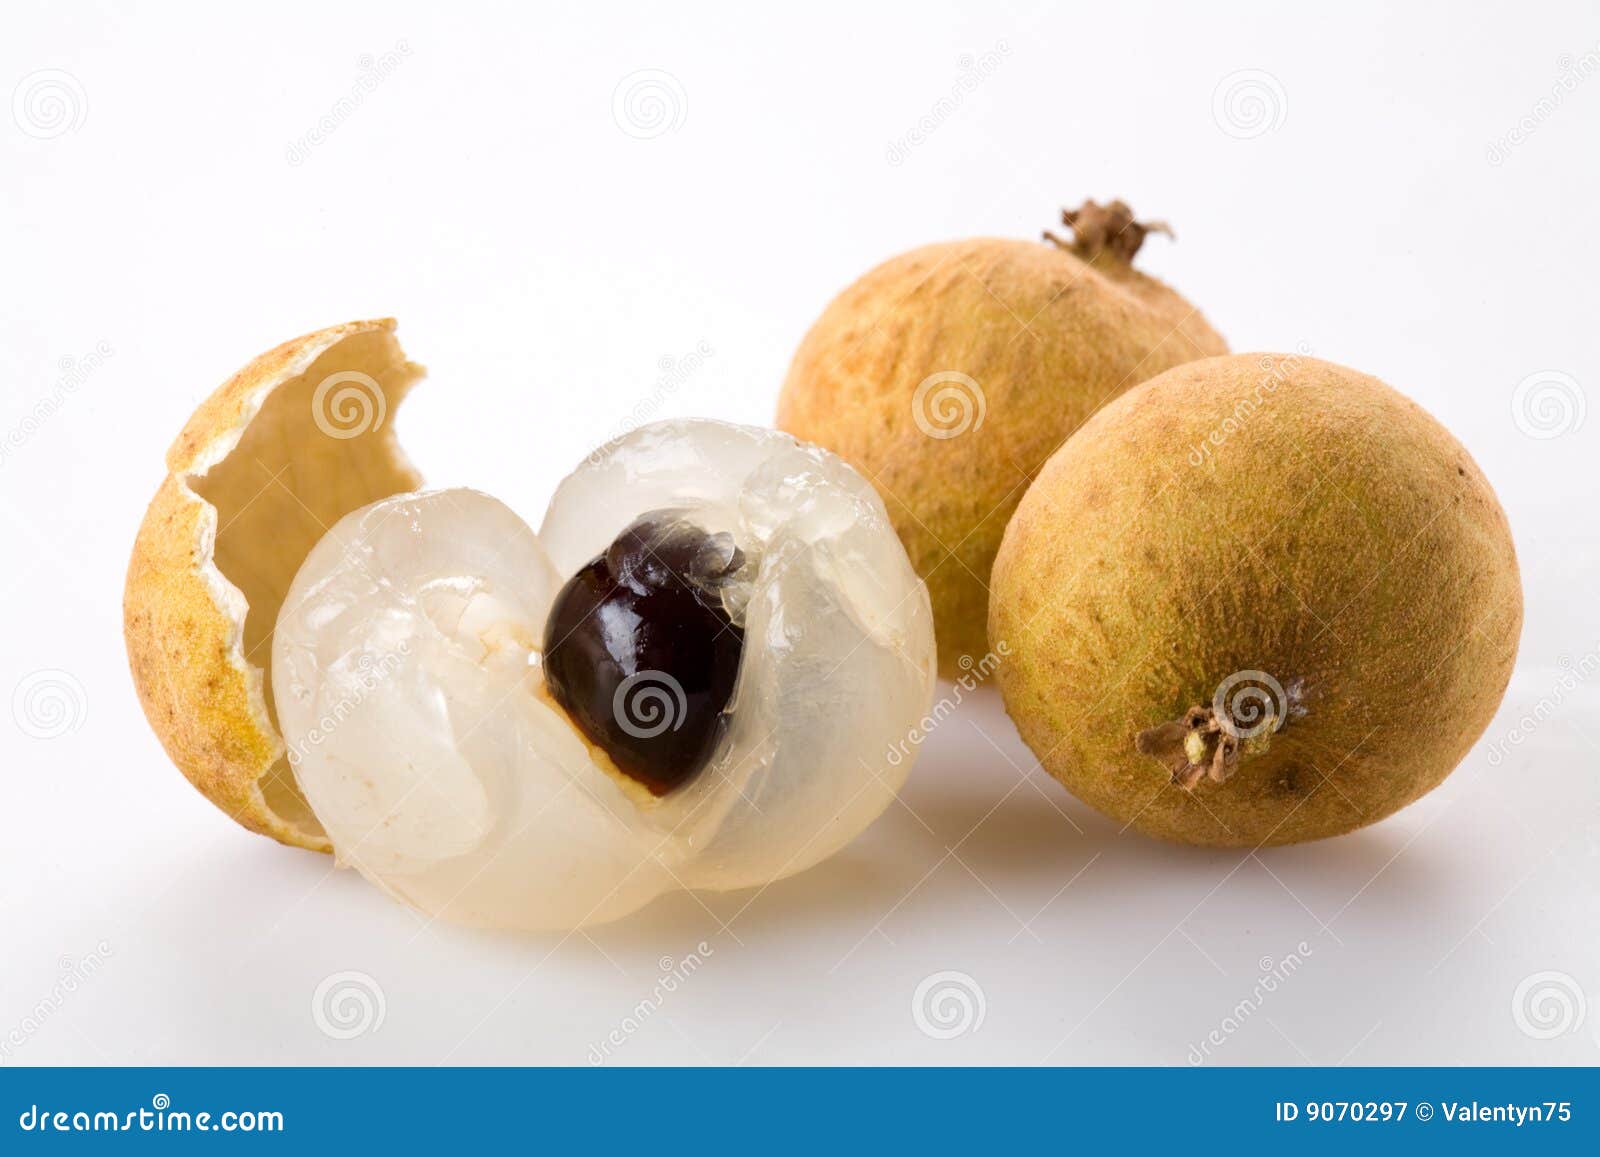 longan - exotic fruit